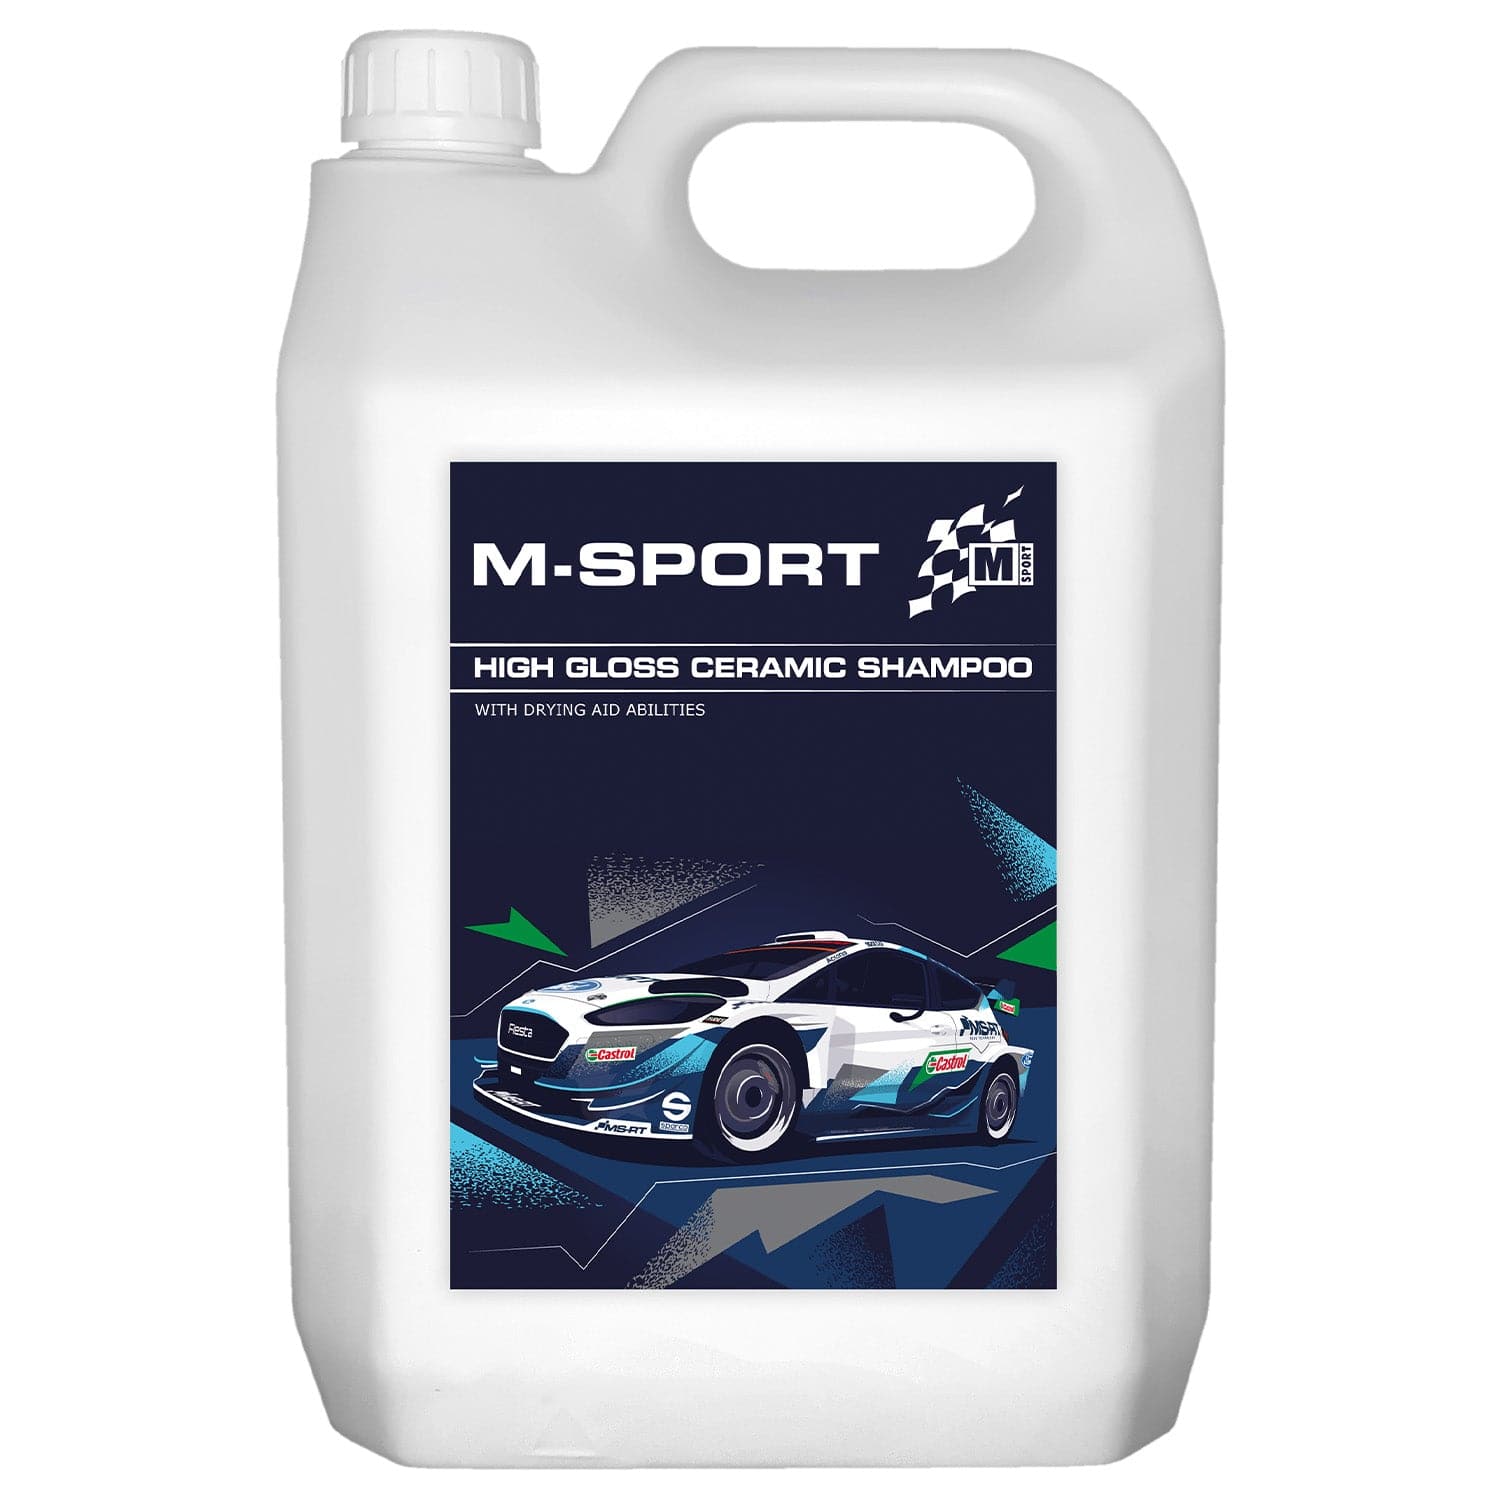 M-Sport High Gloss Ceramic Shampoo 5L